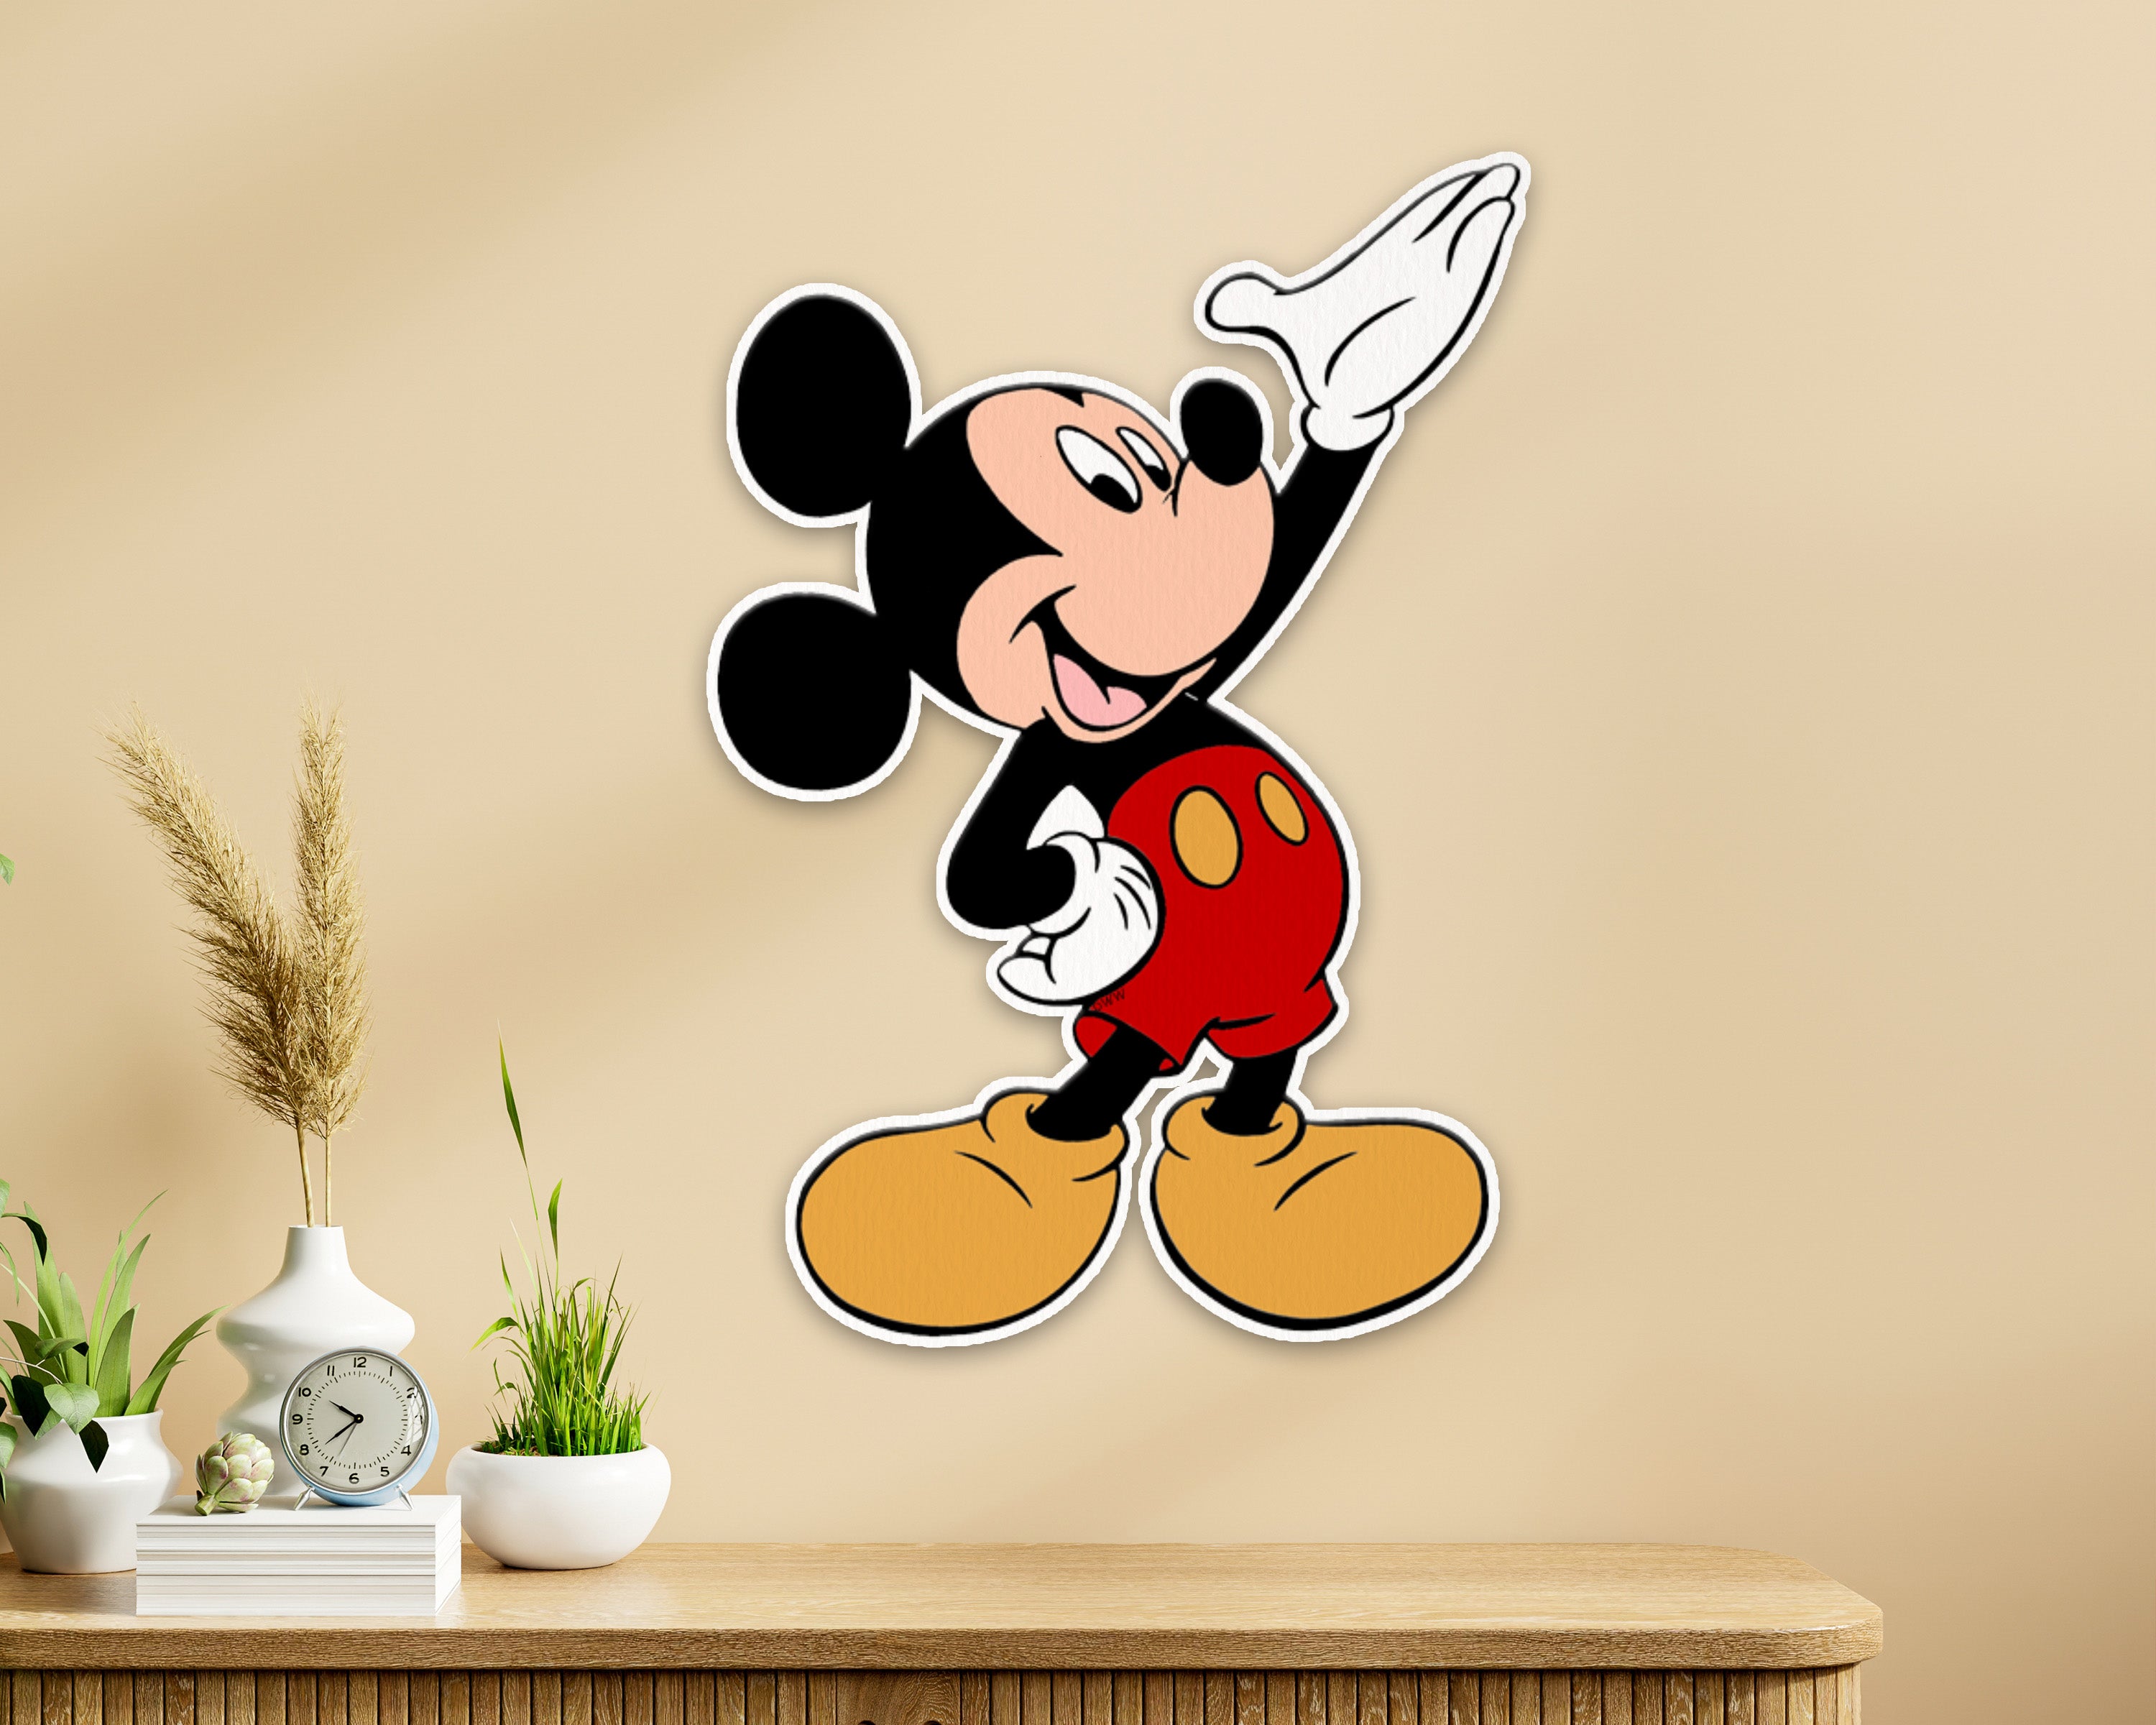 PSI Mickey Mouse Cutout - 03